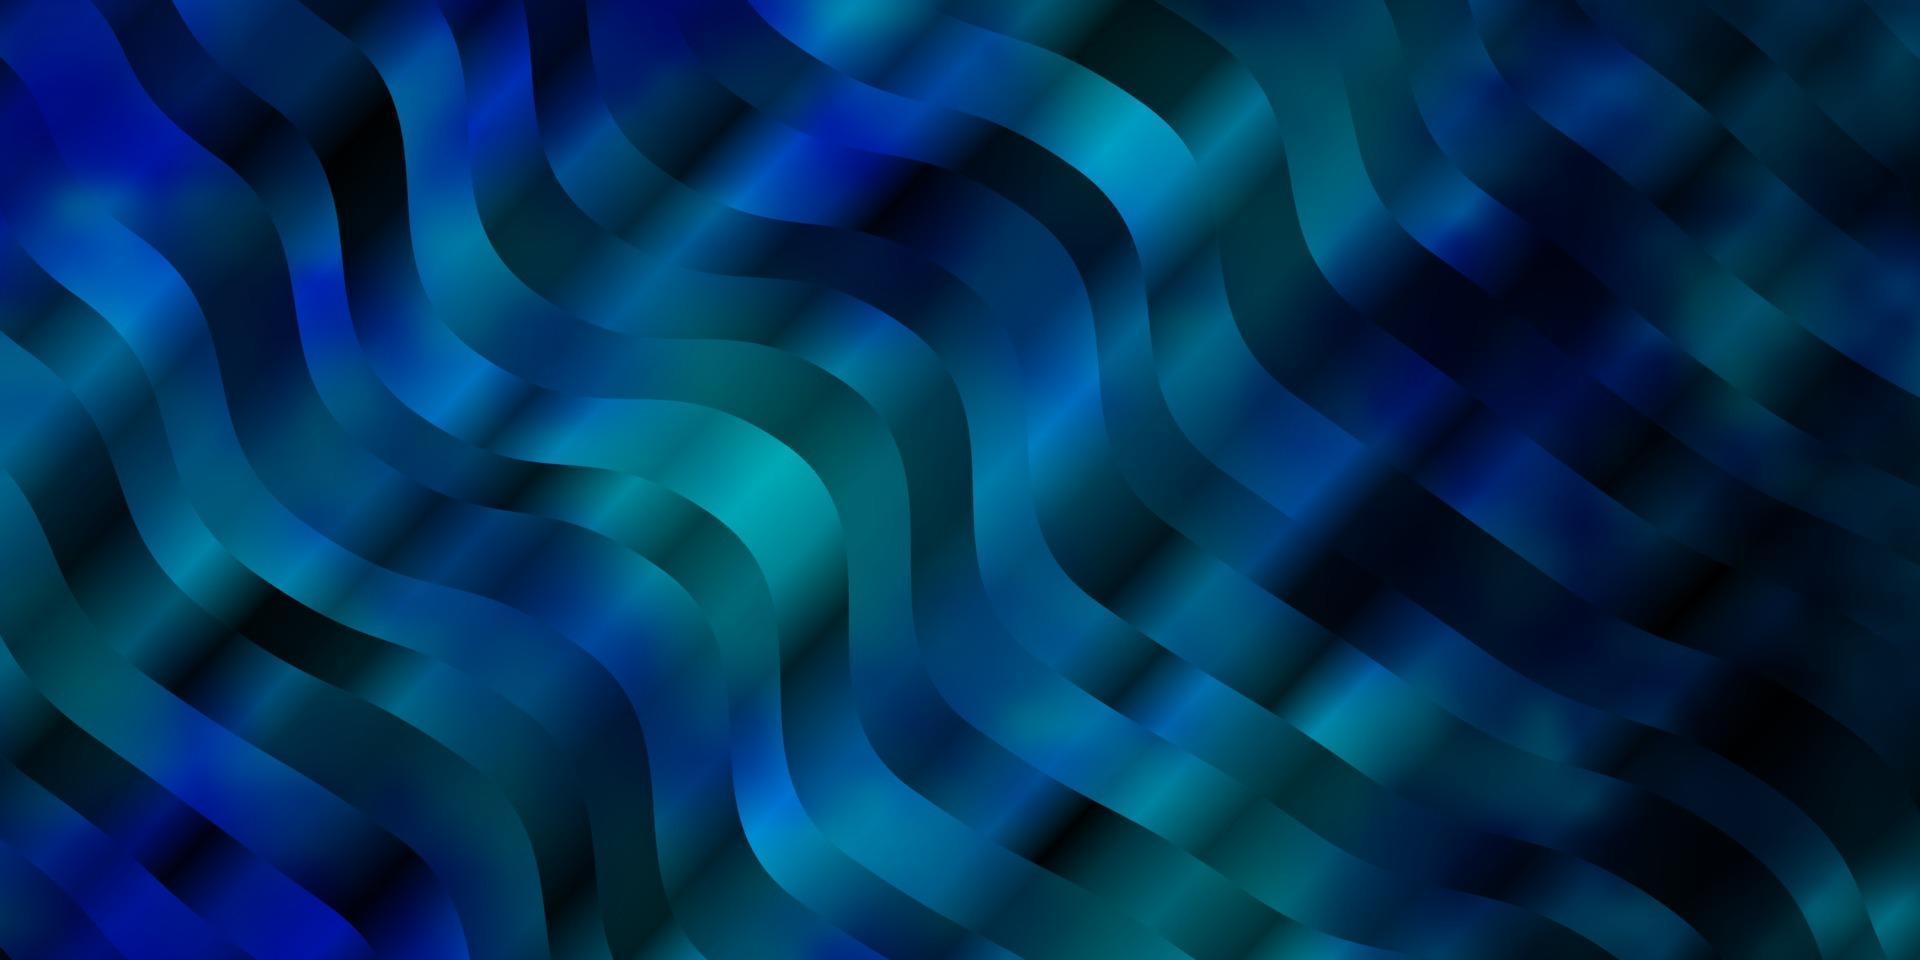 Light BLUE vector texture with circular arc.